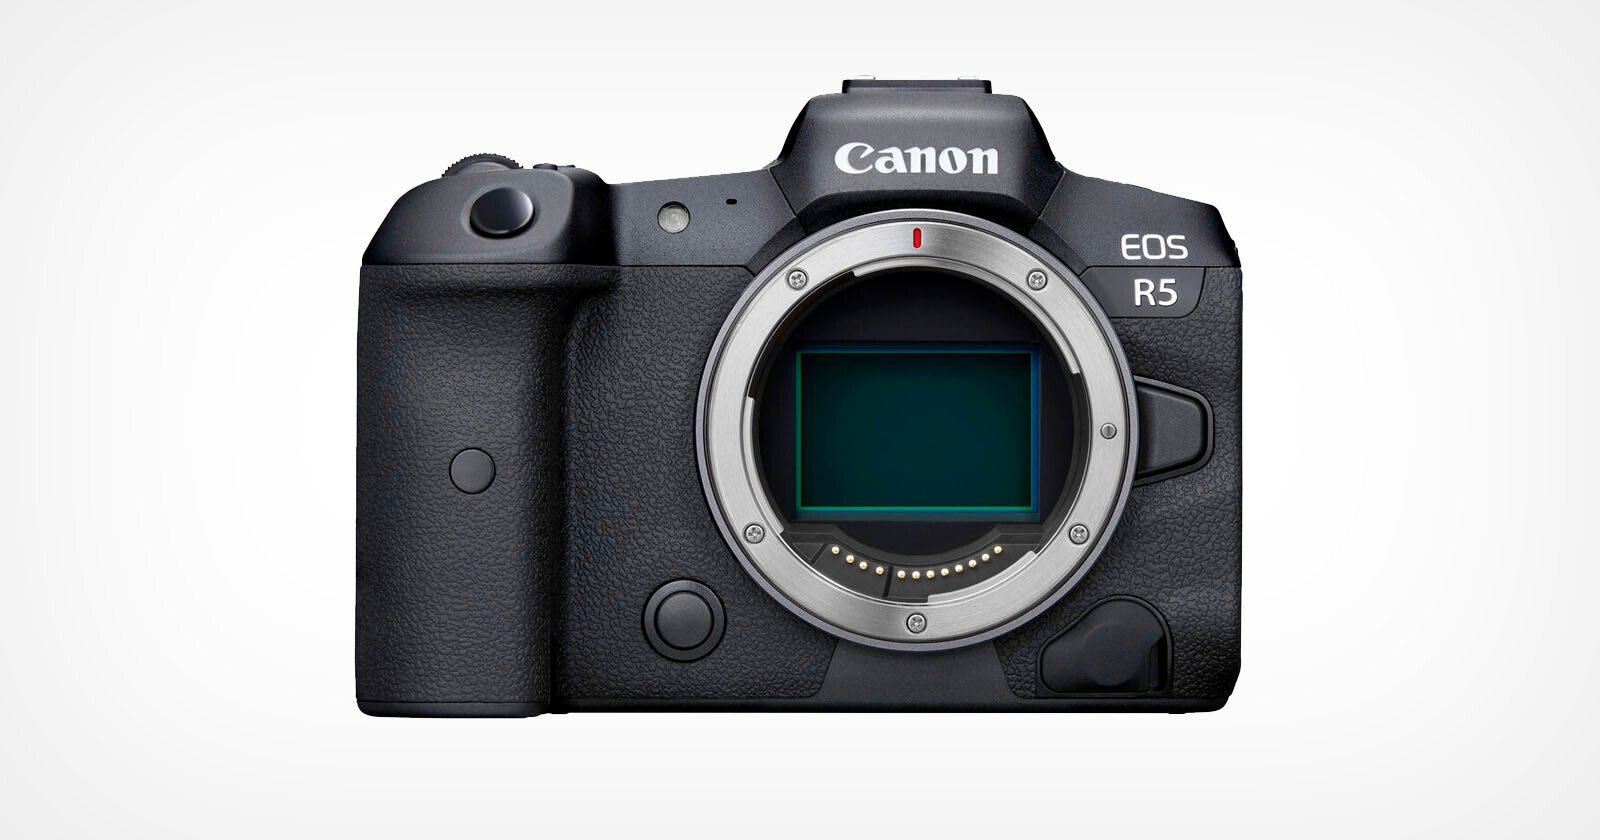  canon can now take massive 400-megapixel photos 